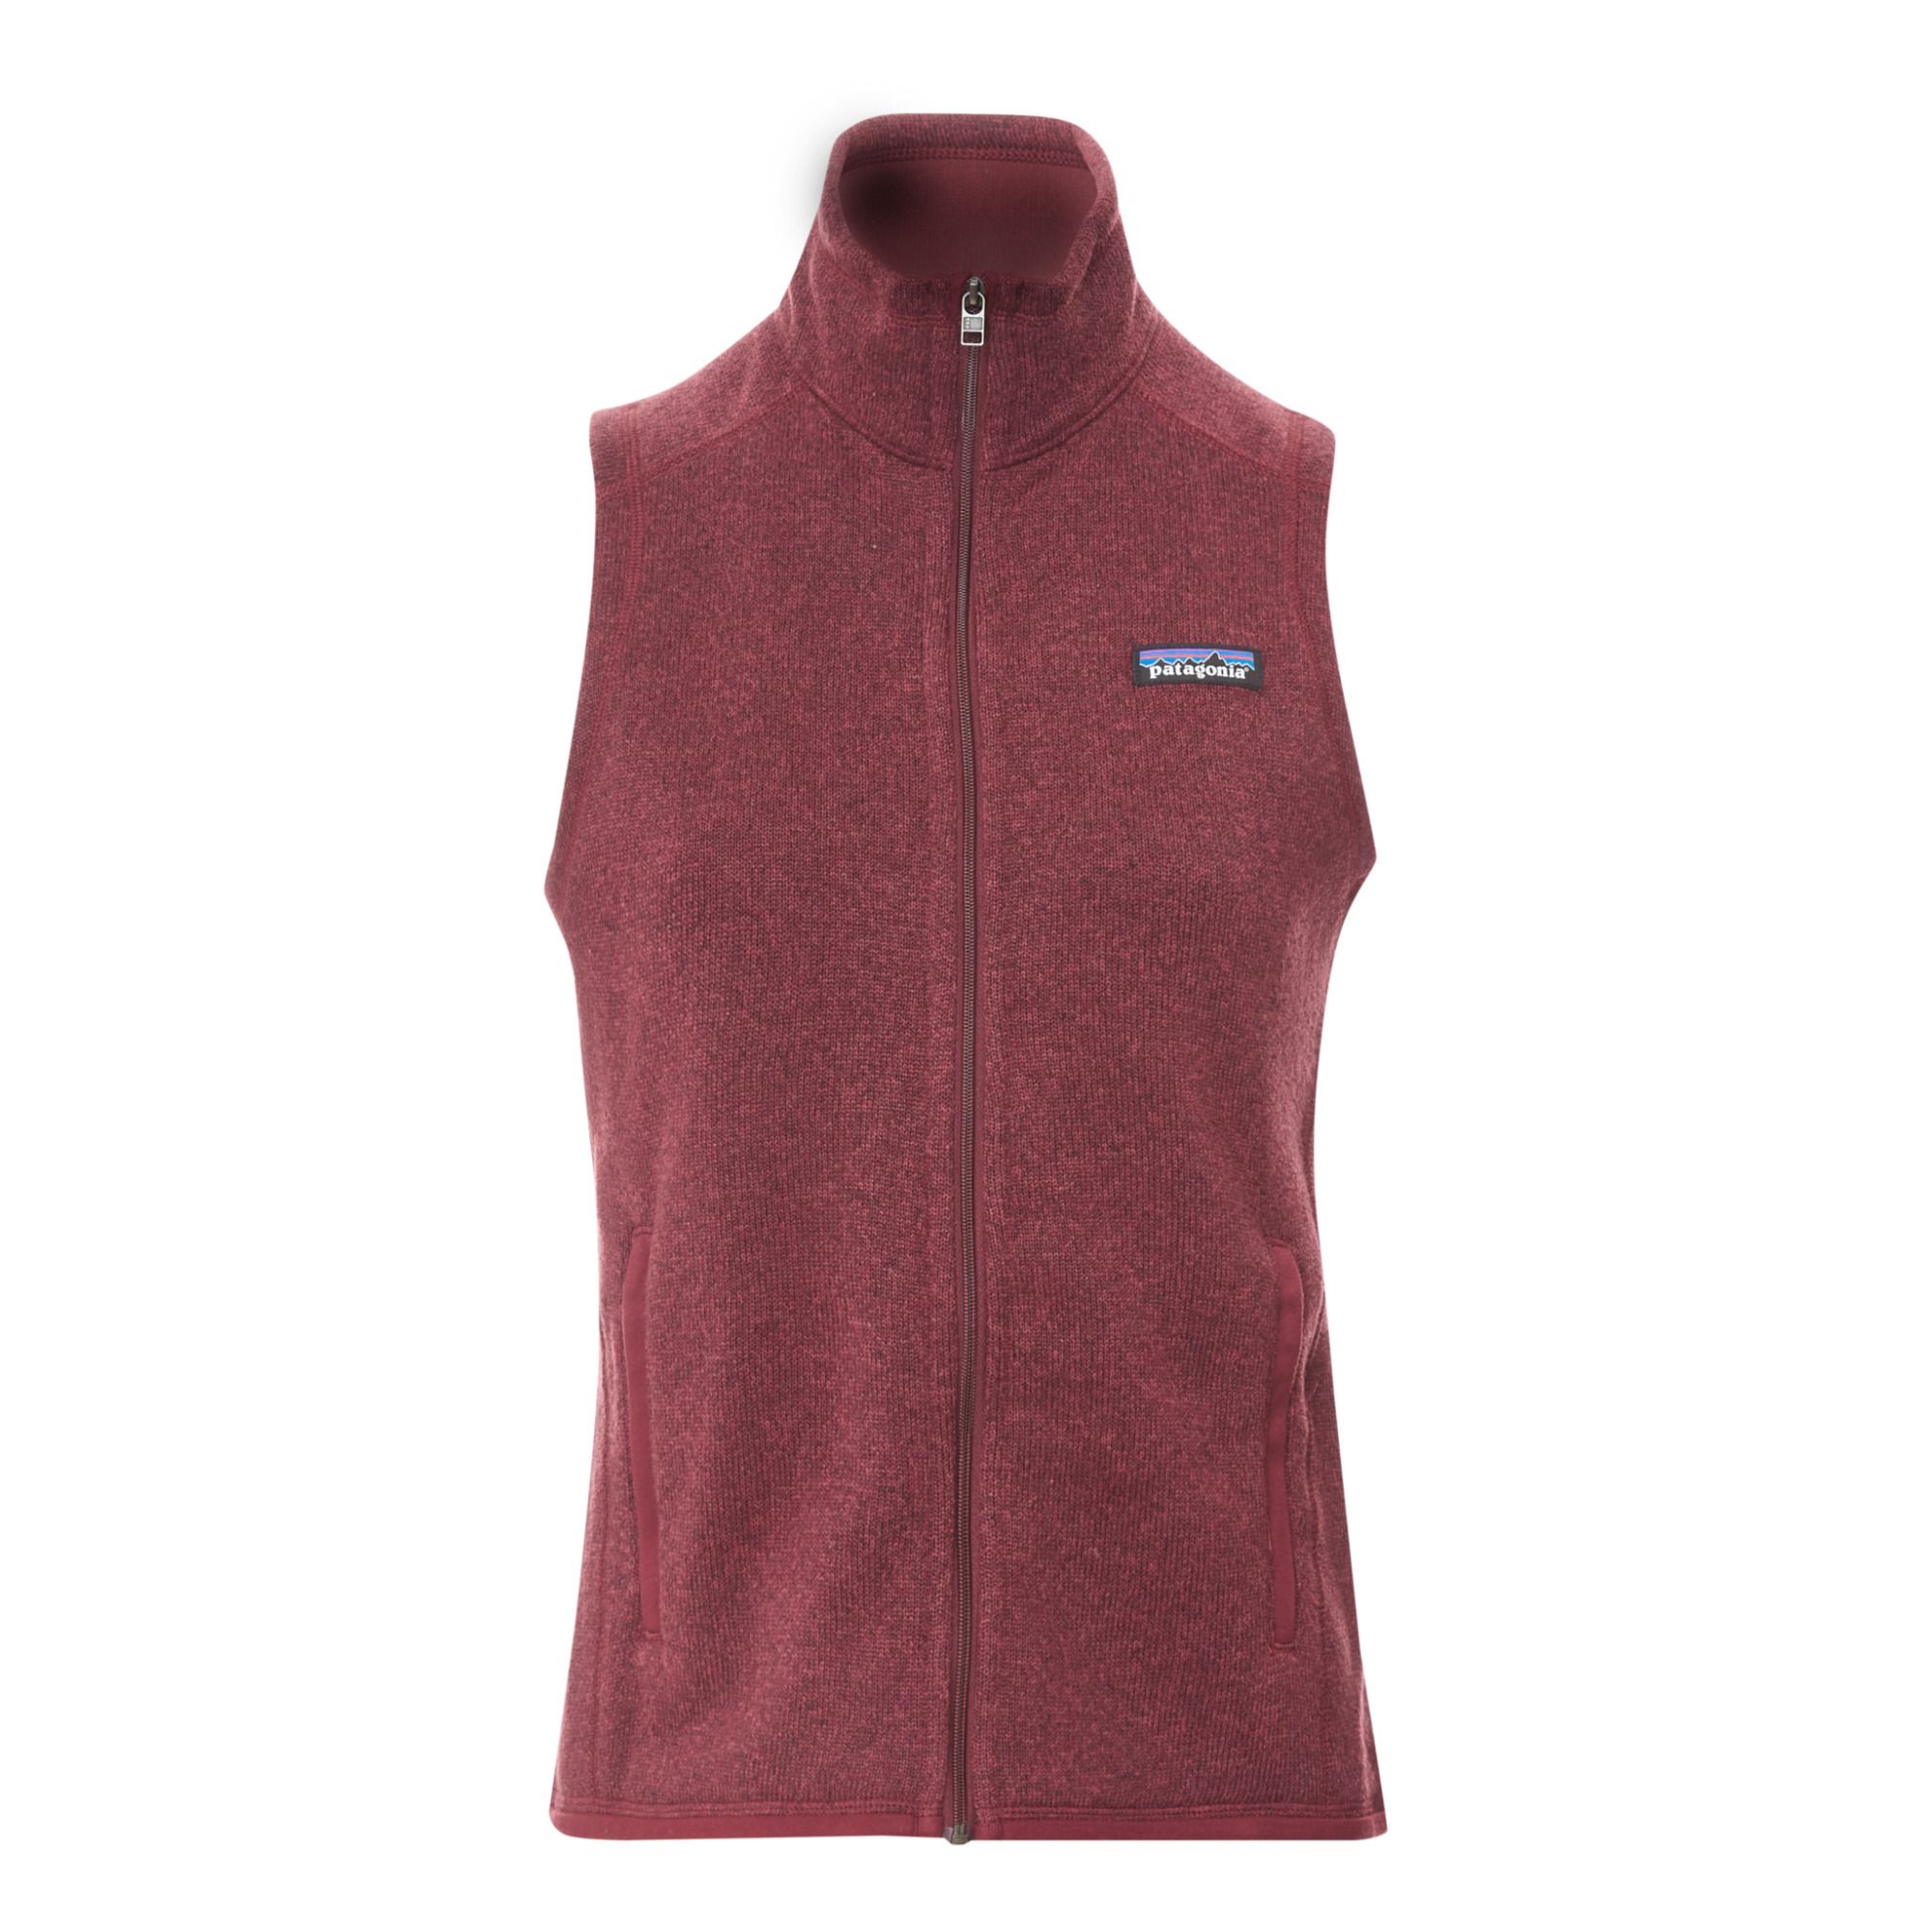 Patagonia - Polaire Better Sweater Sans Manches - Collection Femme - - Bordeaux